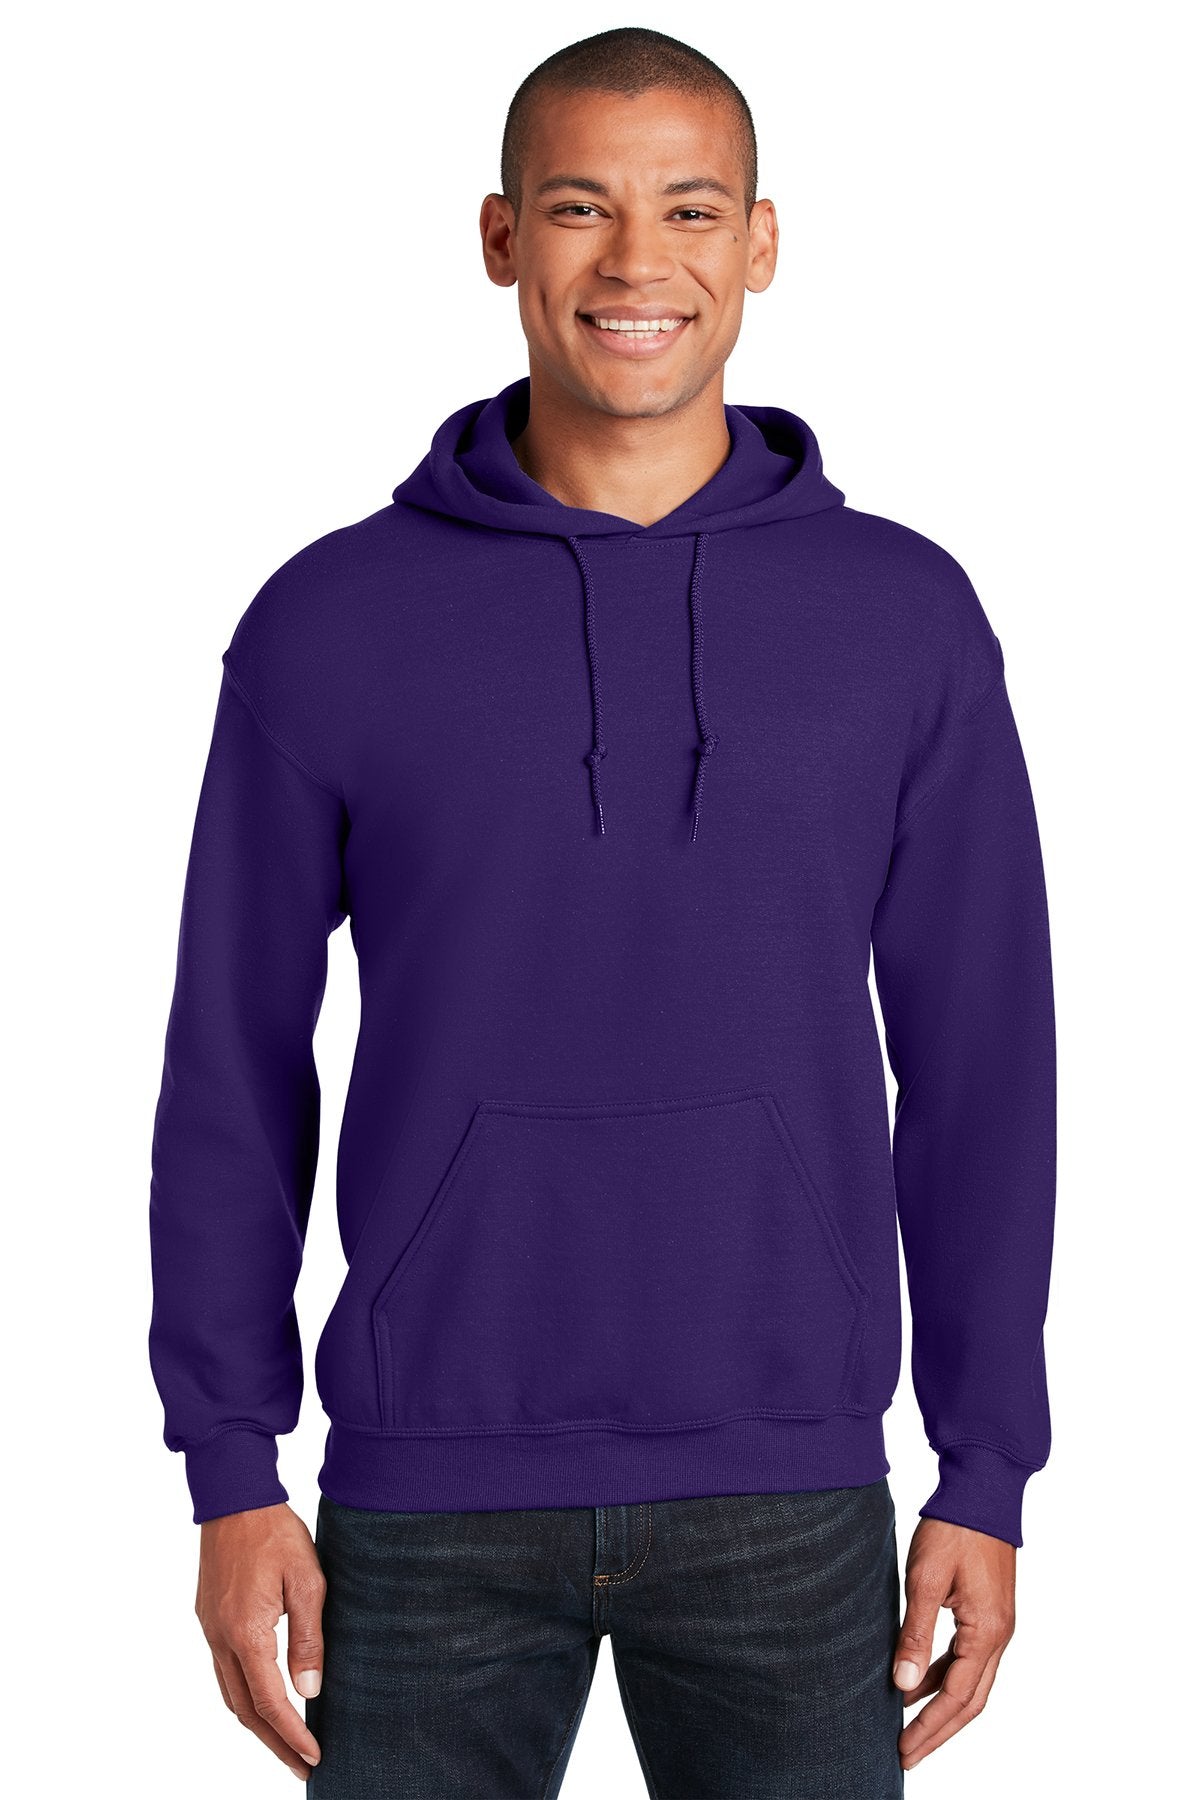 Gildan Purple 18500 custom design sweatshirts